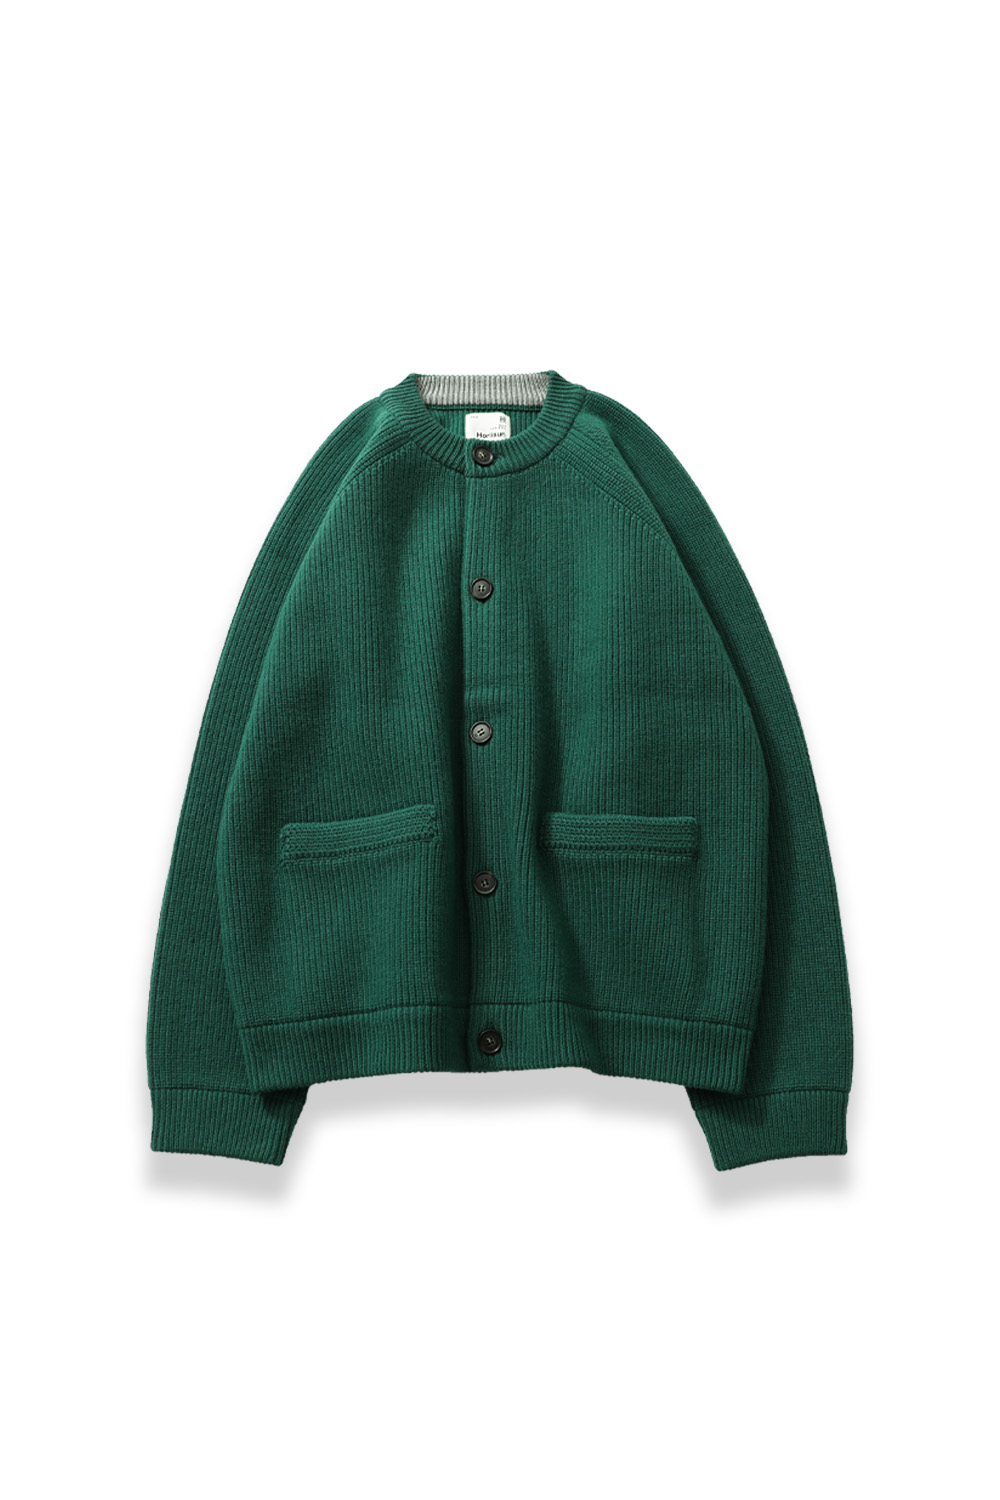 Annette Superfine Wool Heavy Rib Knit Cardigan Smart Green